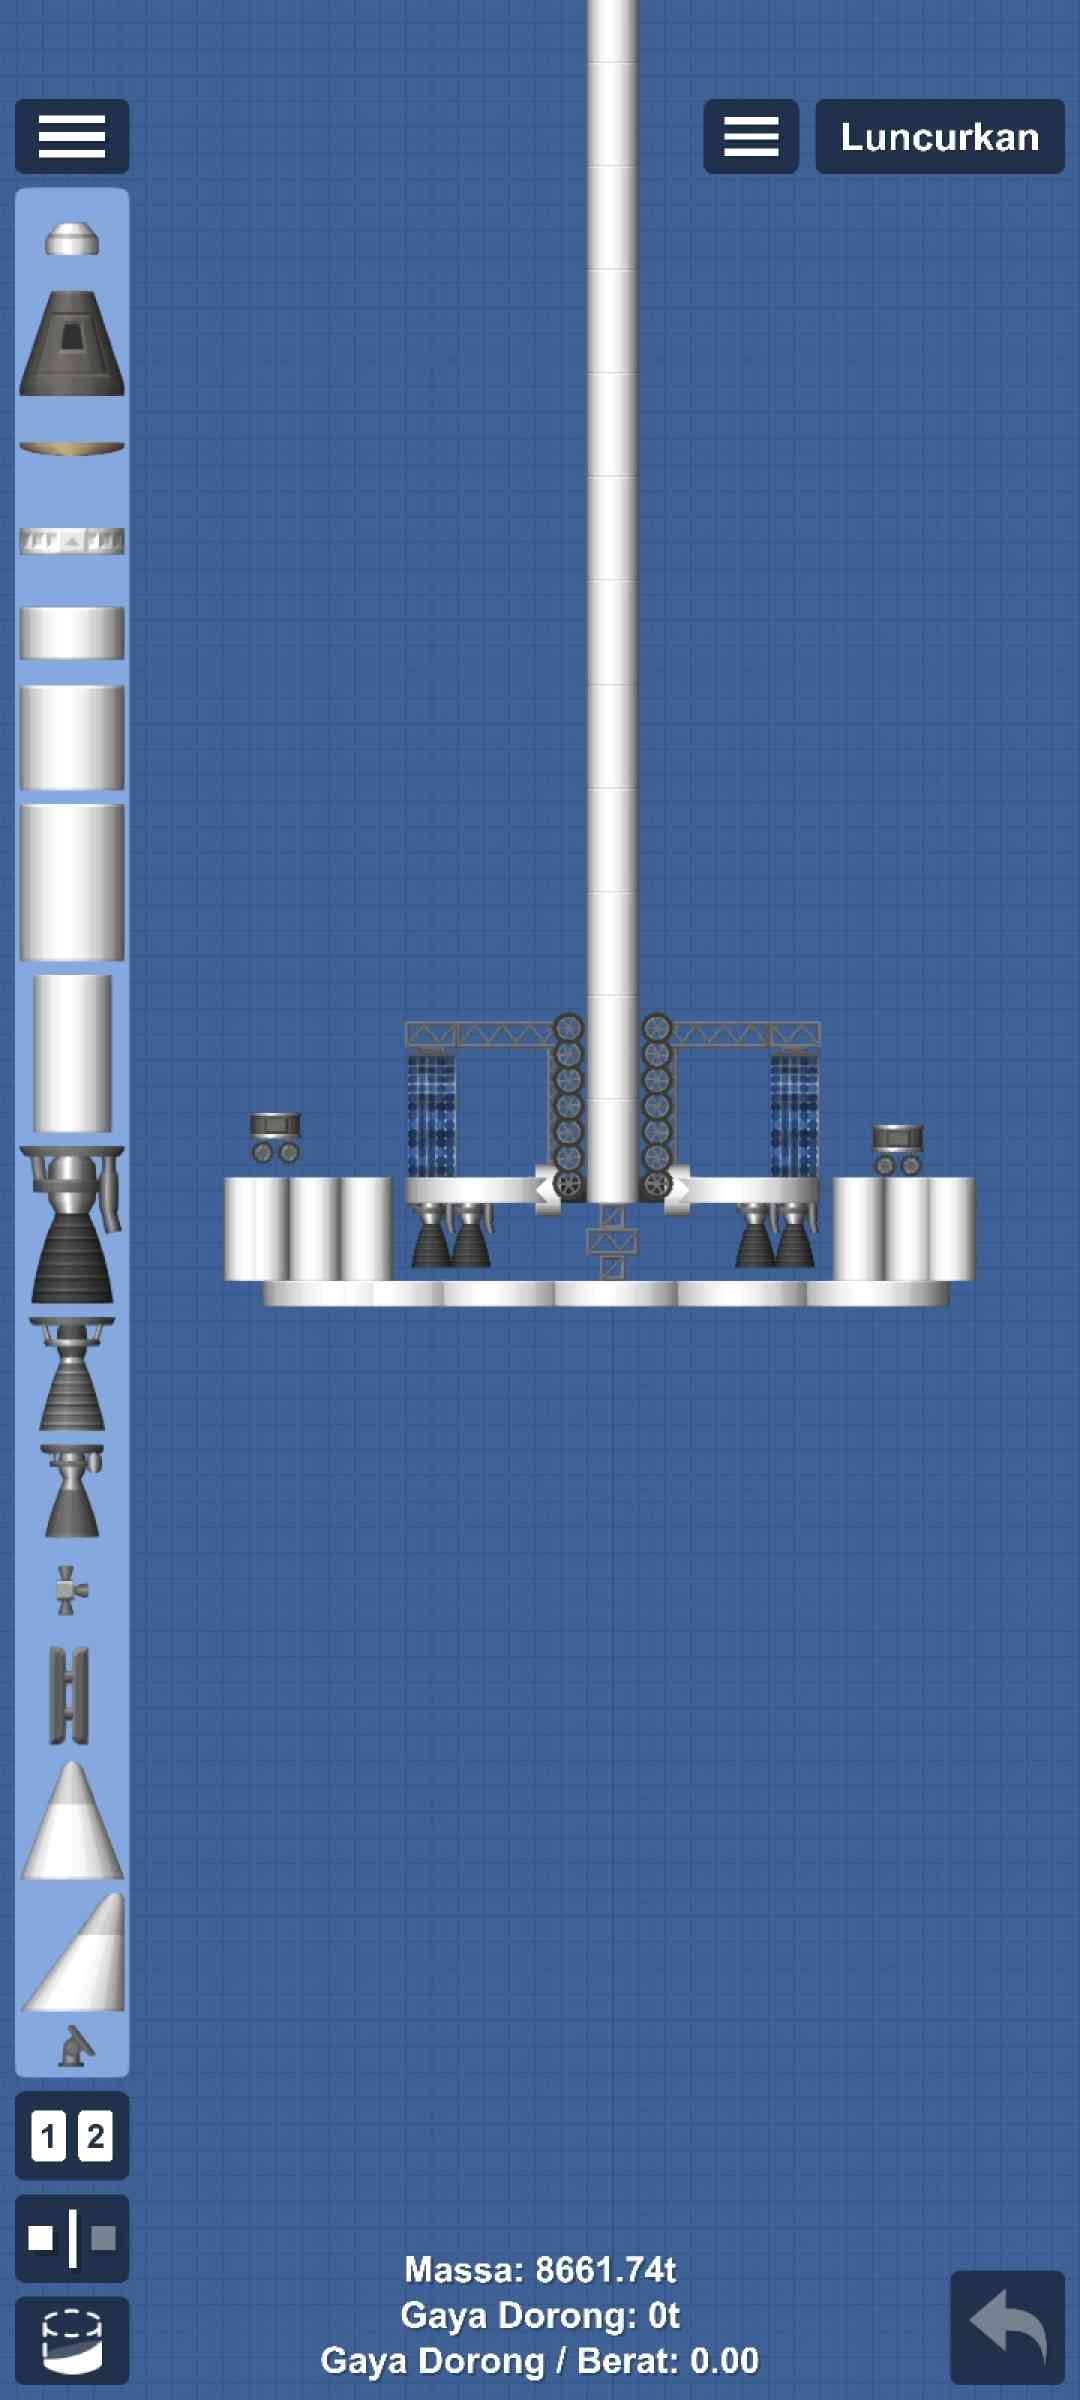 Longest lift in sfs for Spaceflight Simulator • SFS UNIVERSE